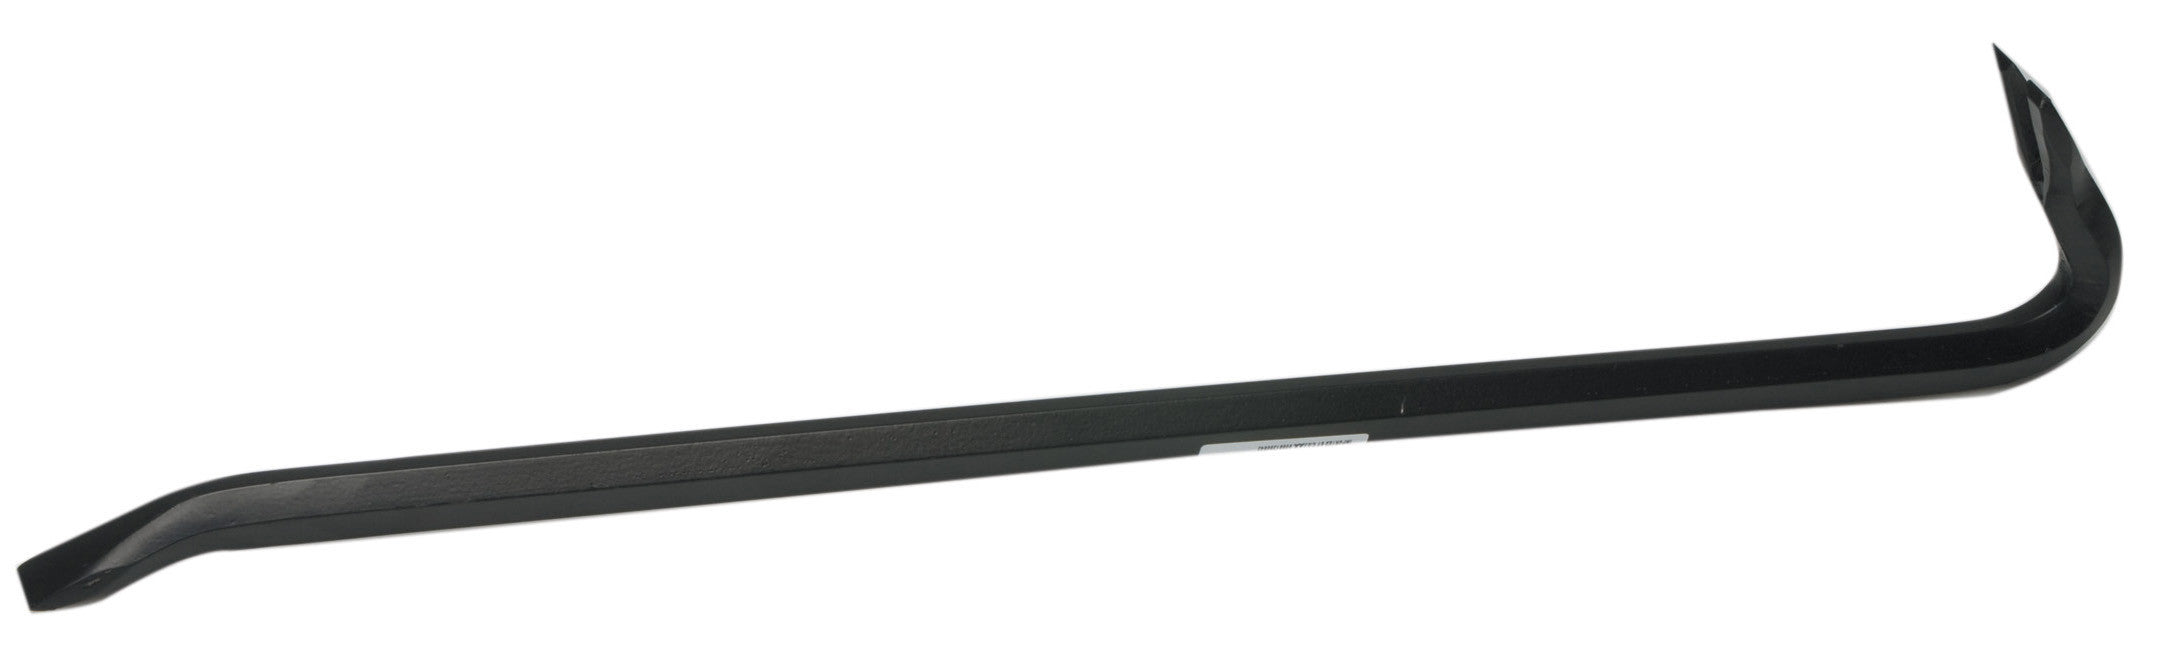 Levachiodi da carpentiere cm.60 (24) 18mm